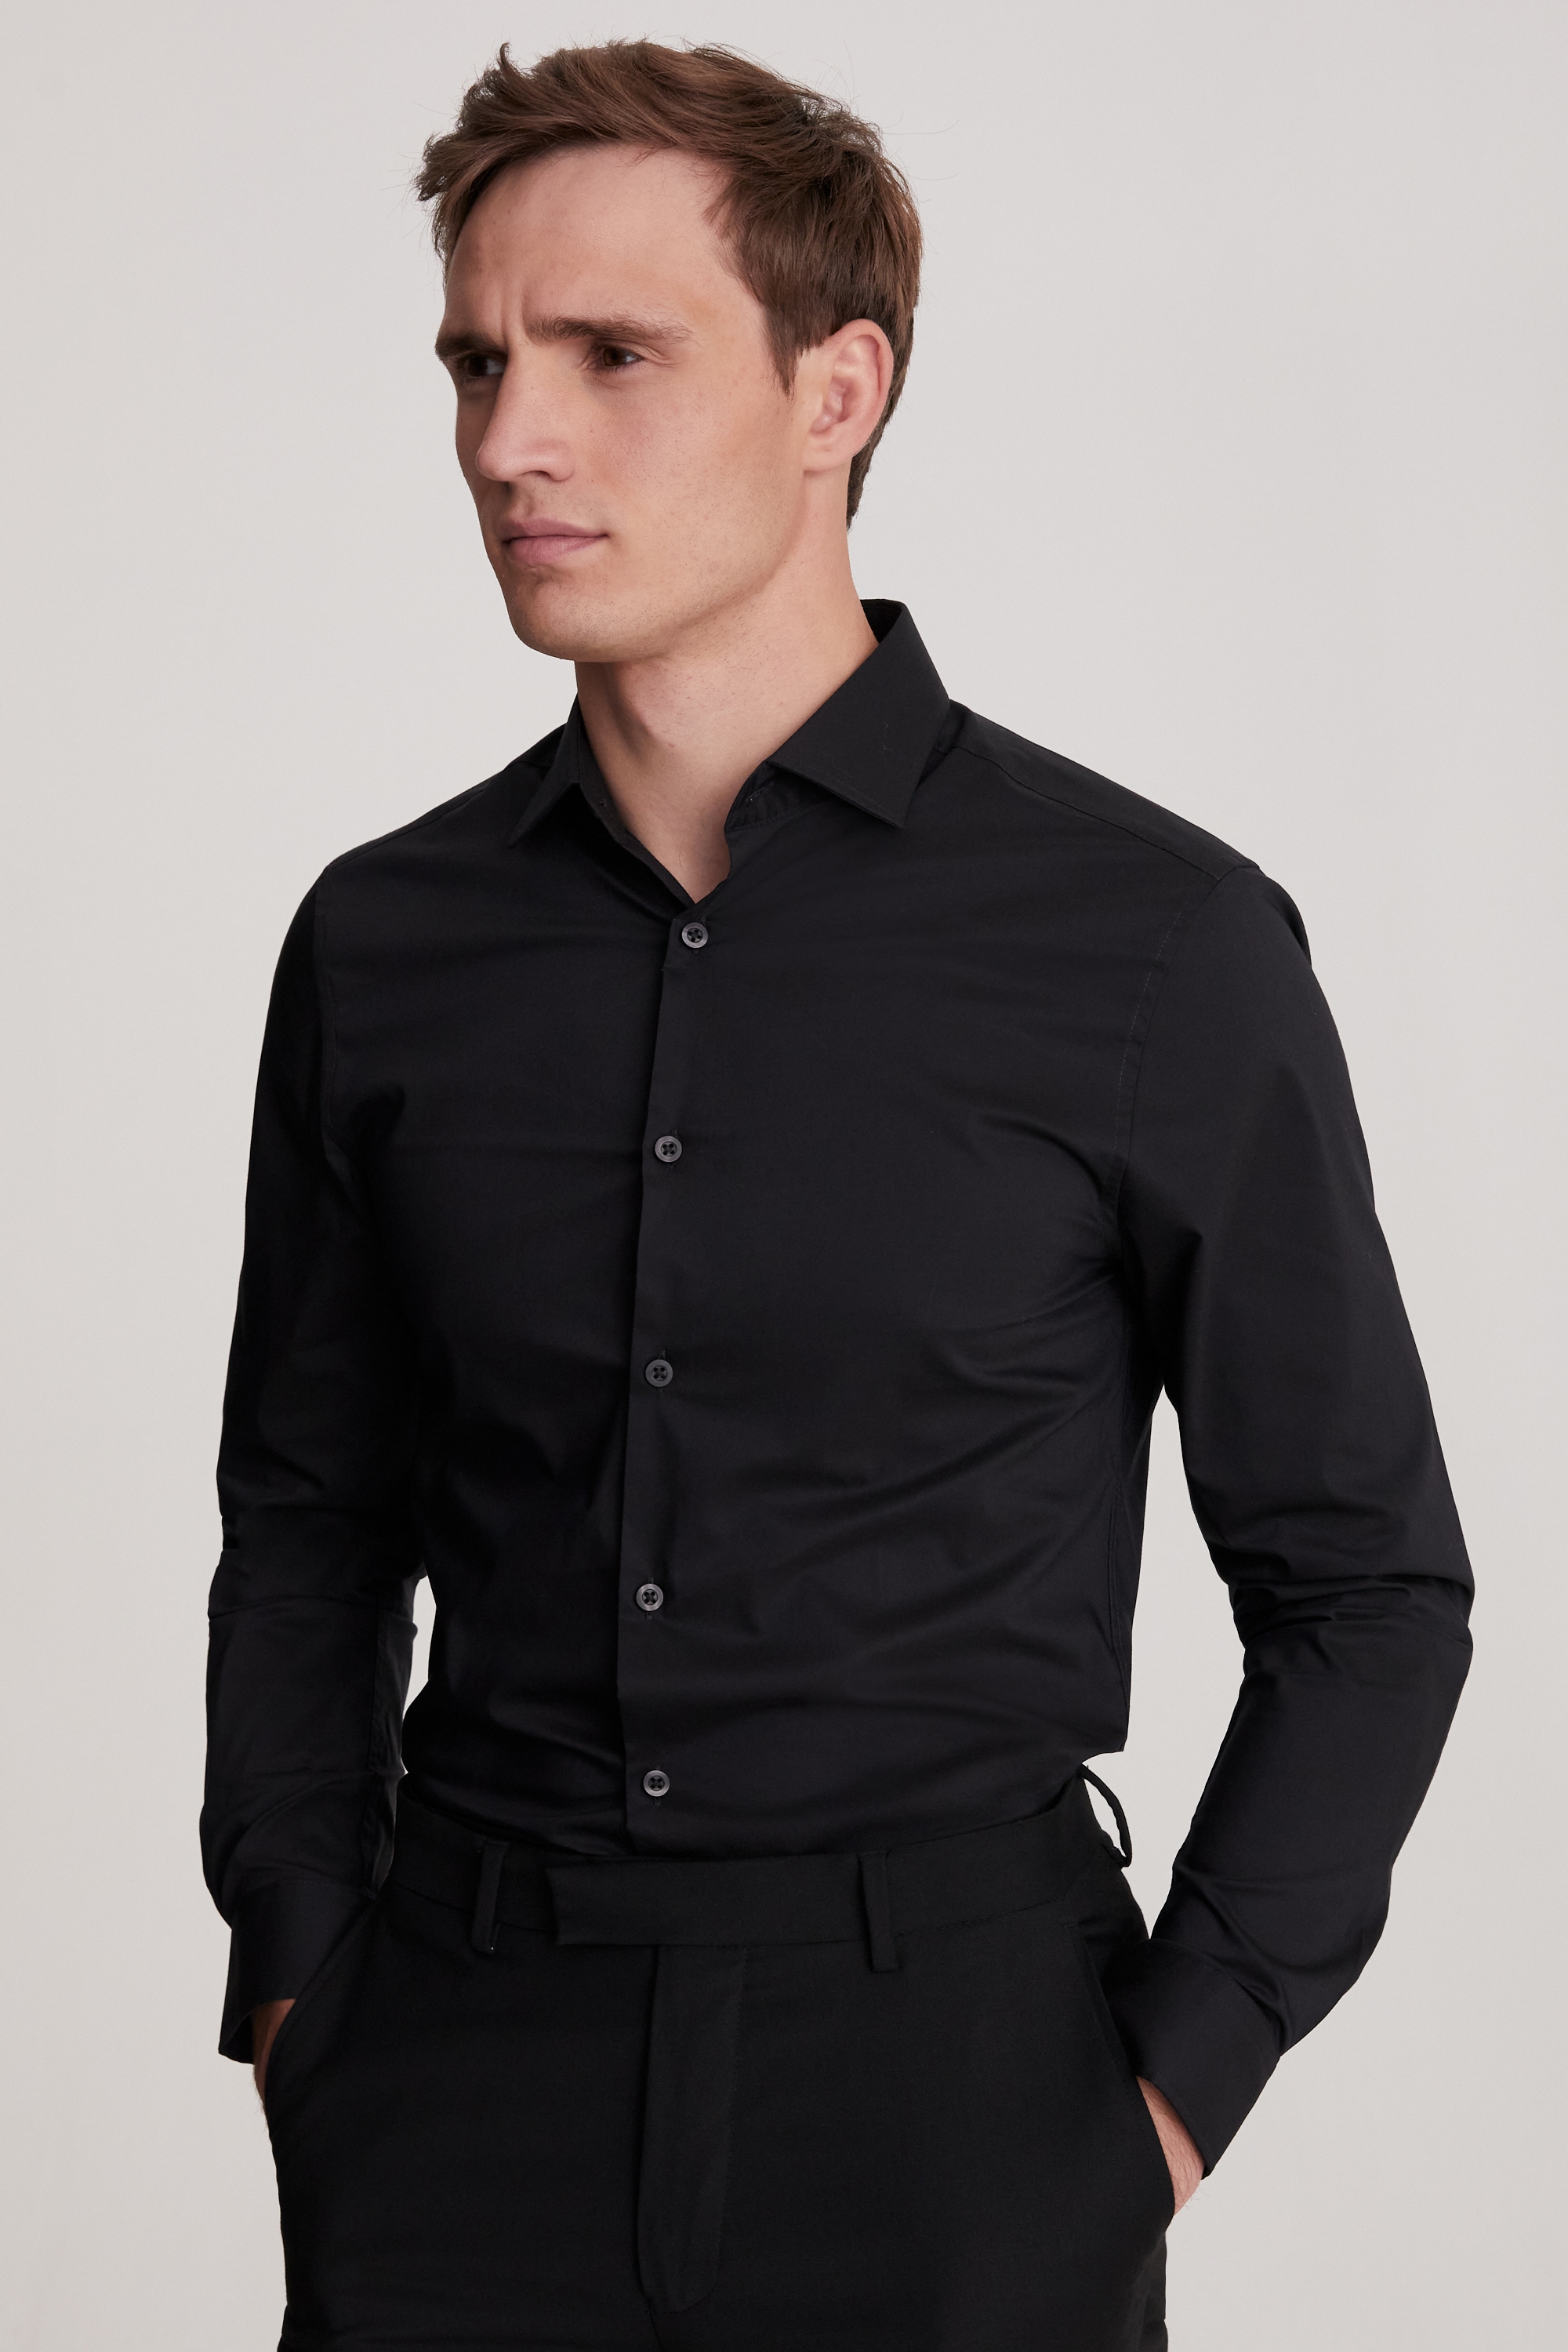 Slim Fit Black Stretch Shirt | Buy Online at Moss